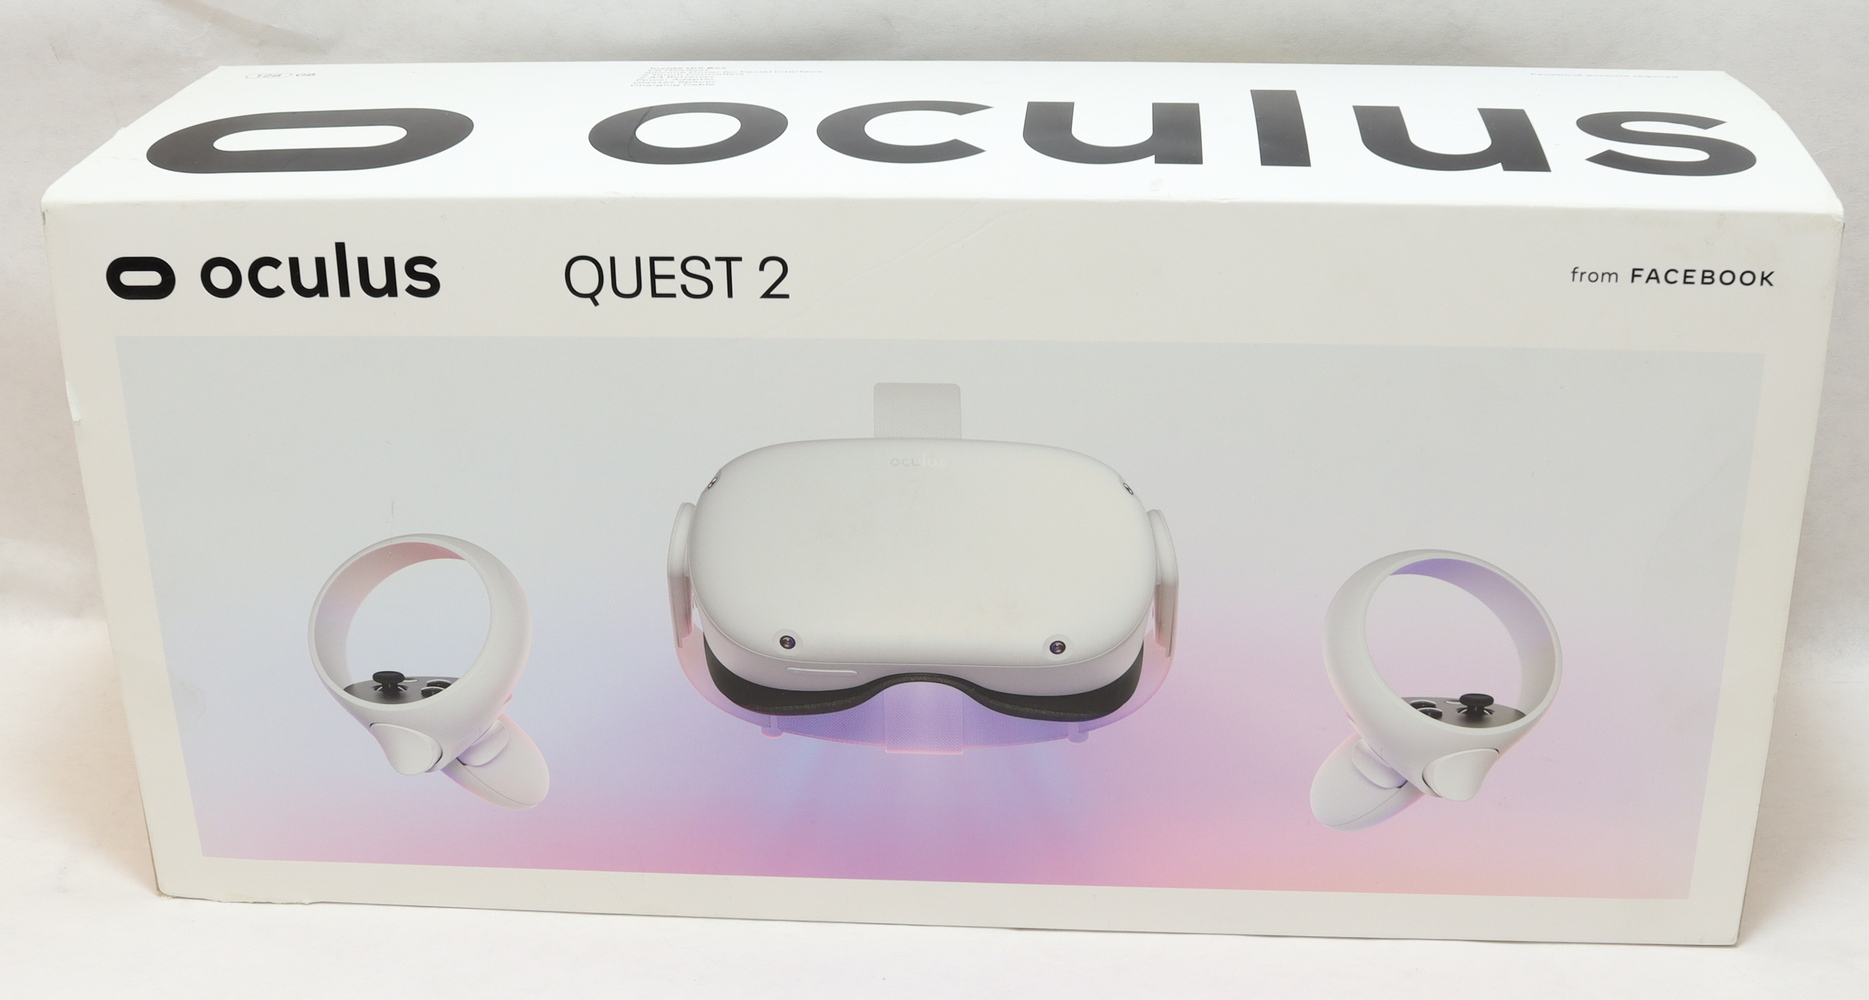 meta oculus quest 2 128gb vr headset in original box